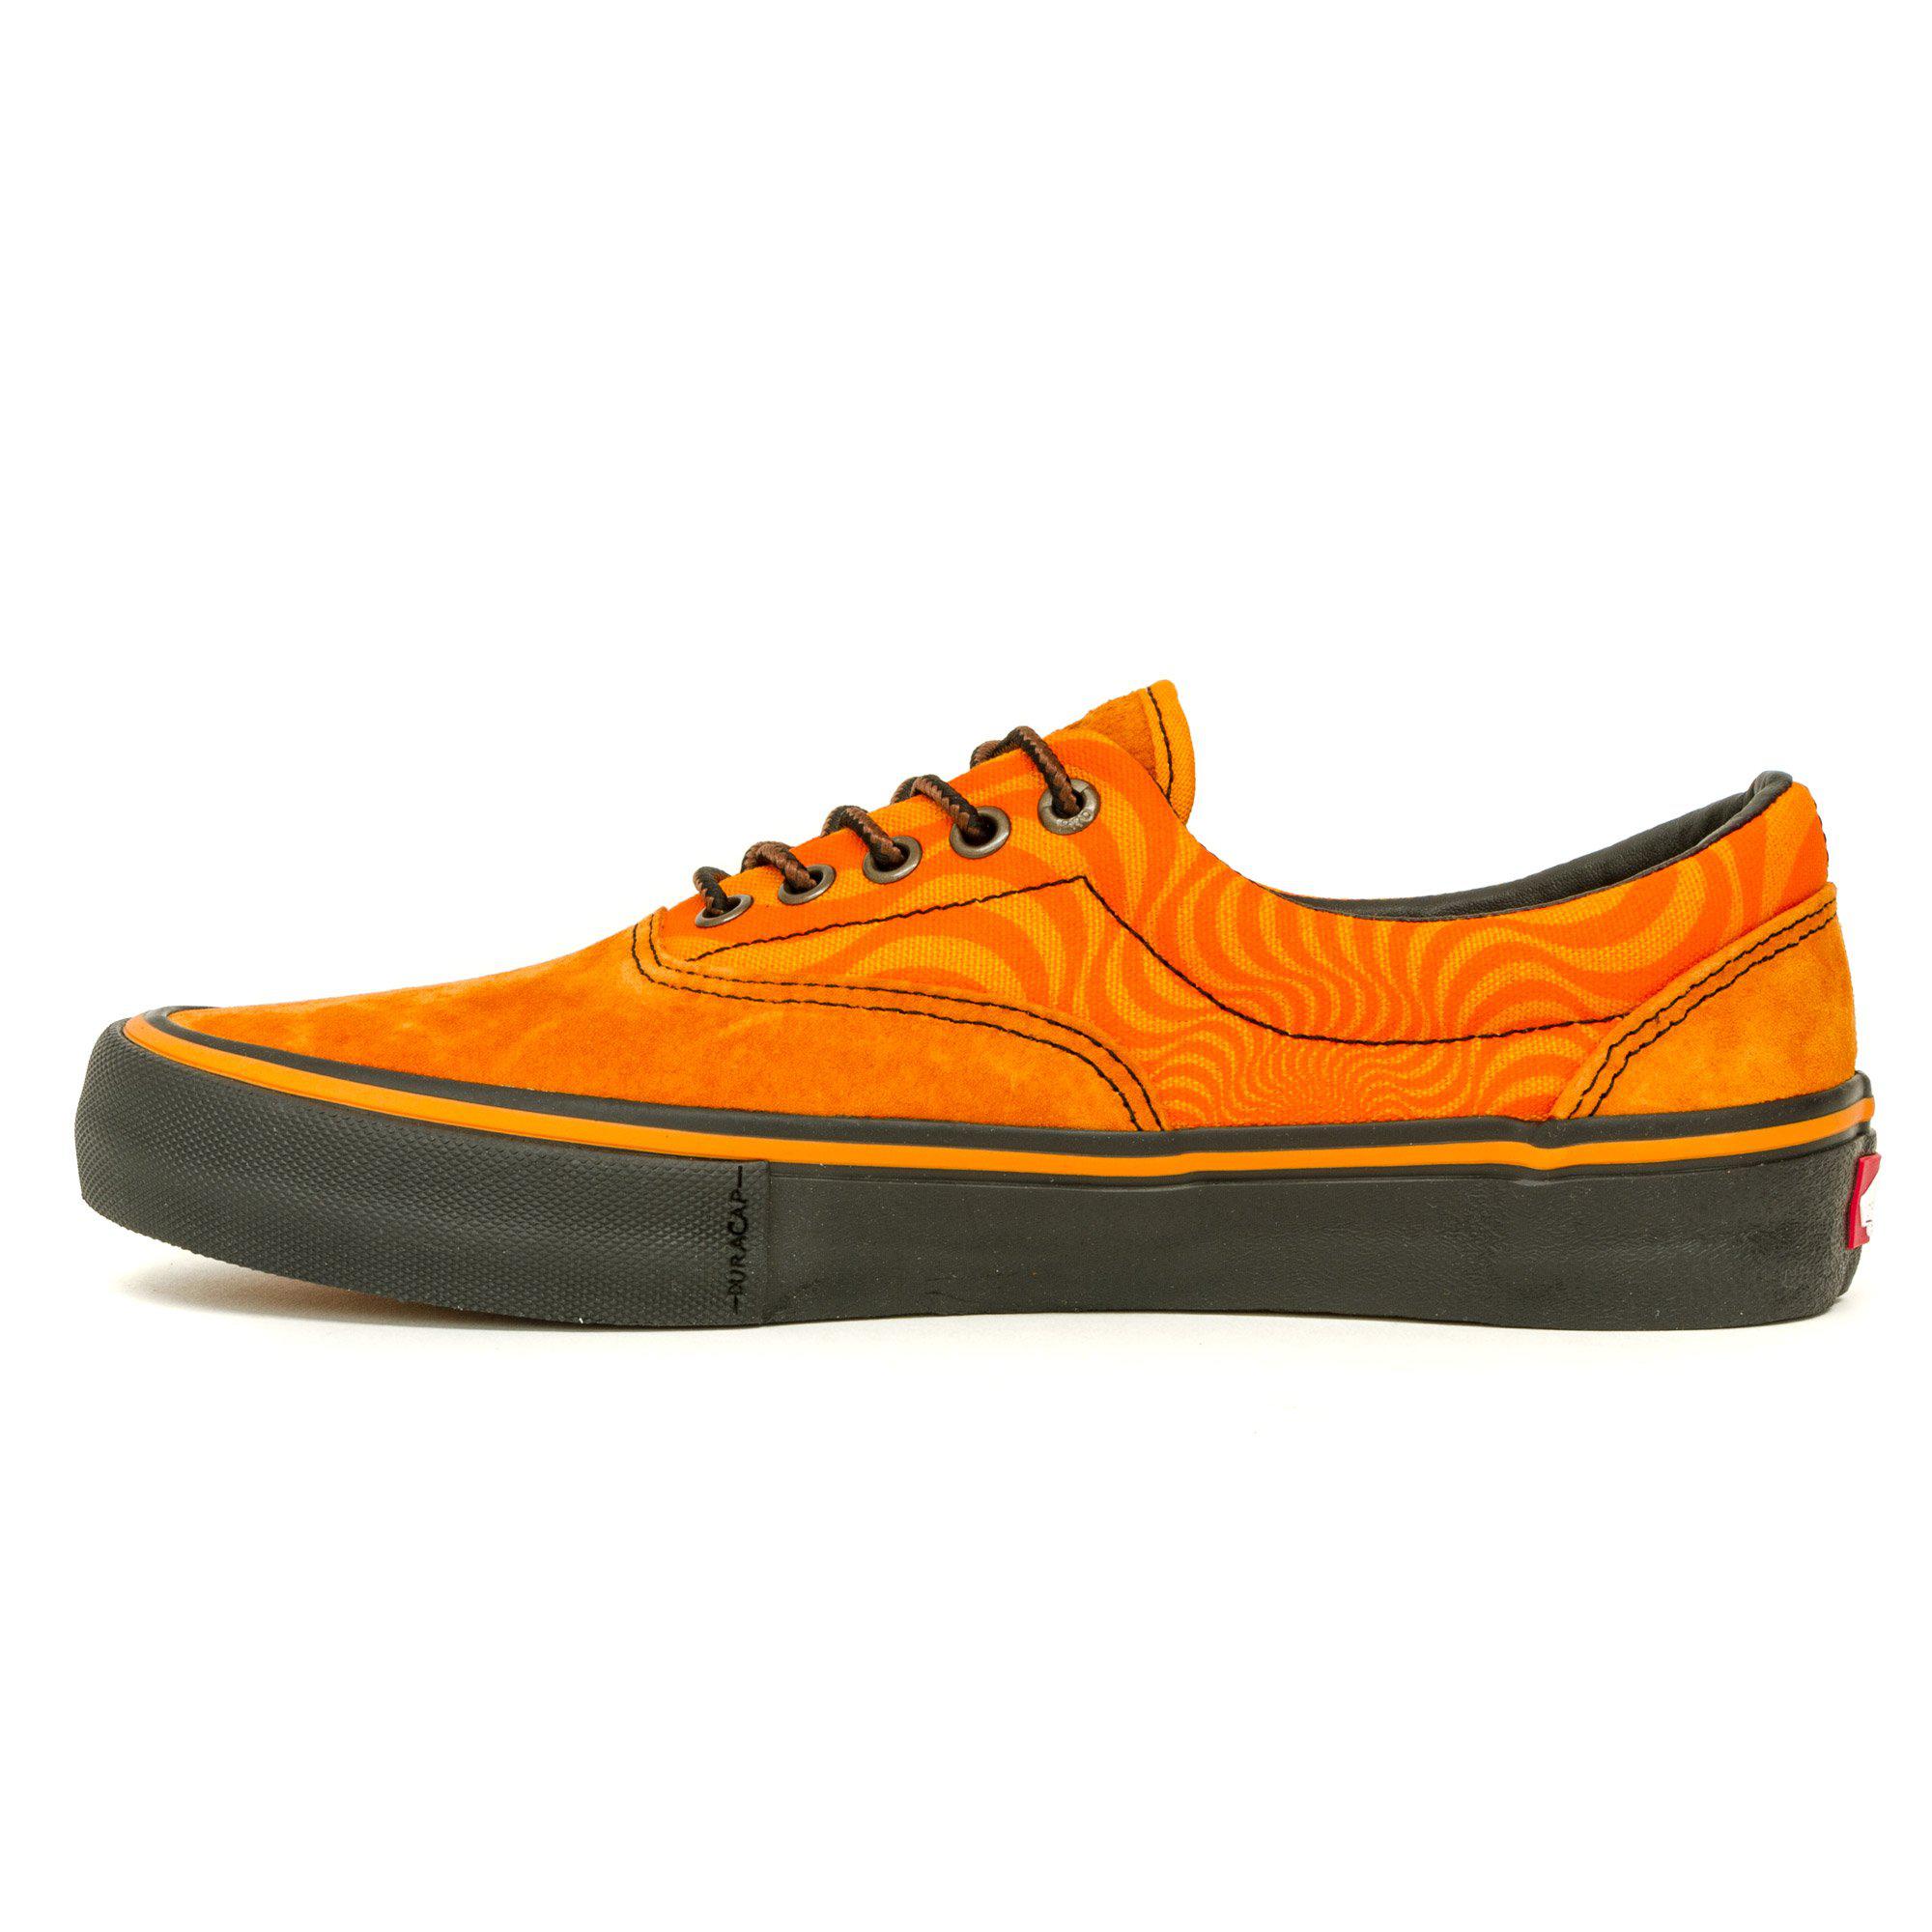 X Spitfire Era Shoes in Orange for Men - Lyst